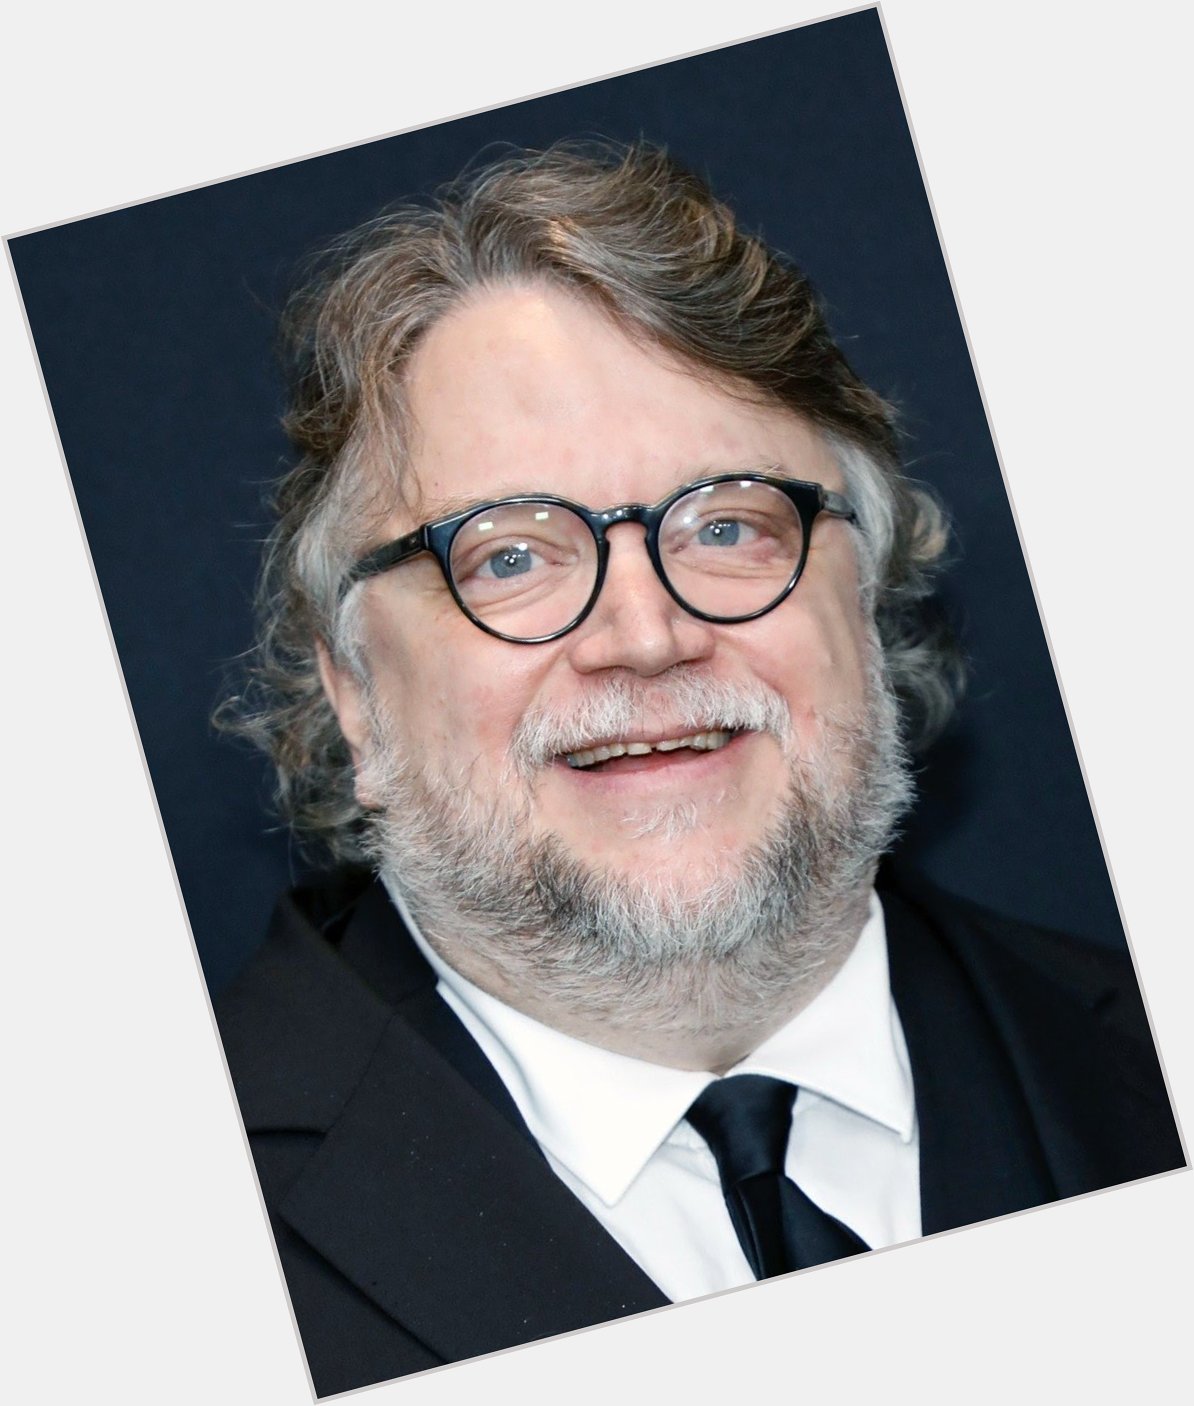 Happy birthday to award-winning director Guillermo del Toro! 